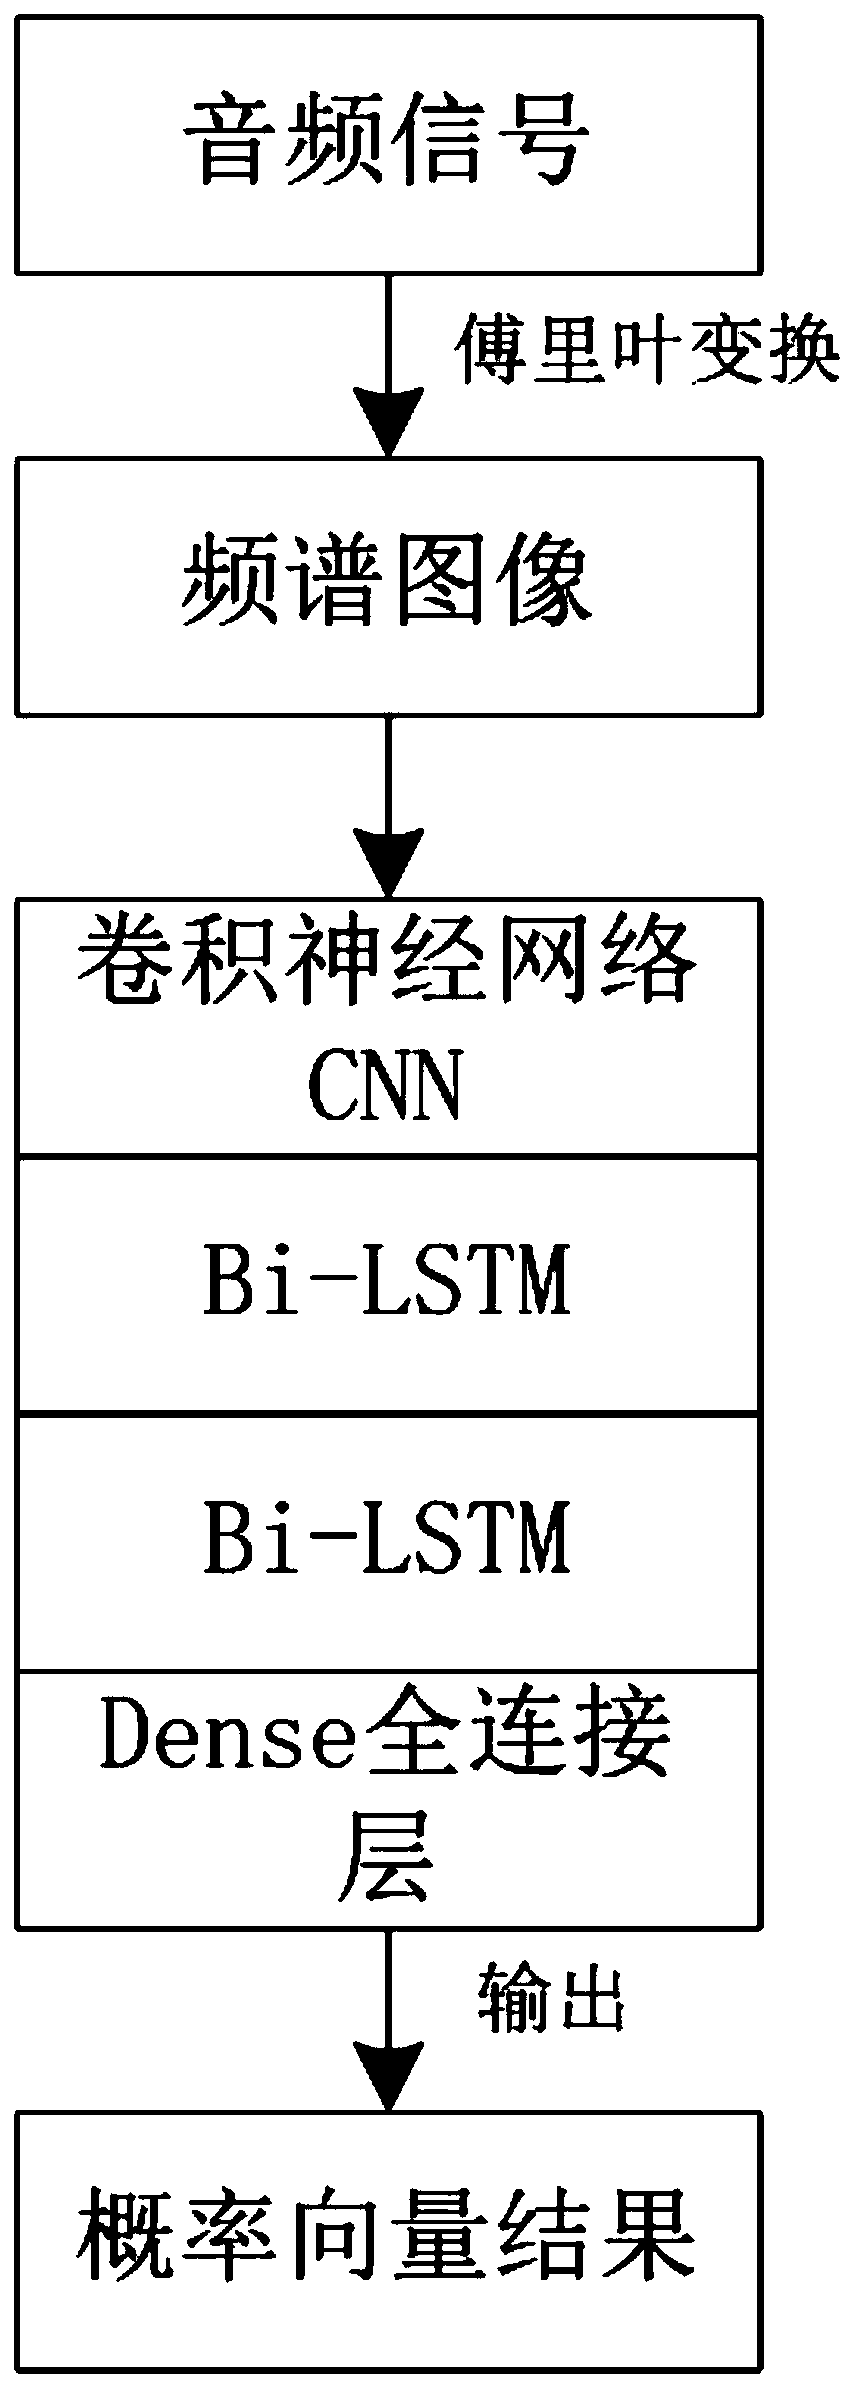 Morse code automatic identification method based on Bi-LSTM neural network